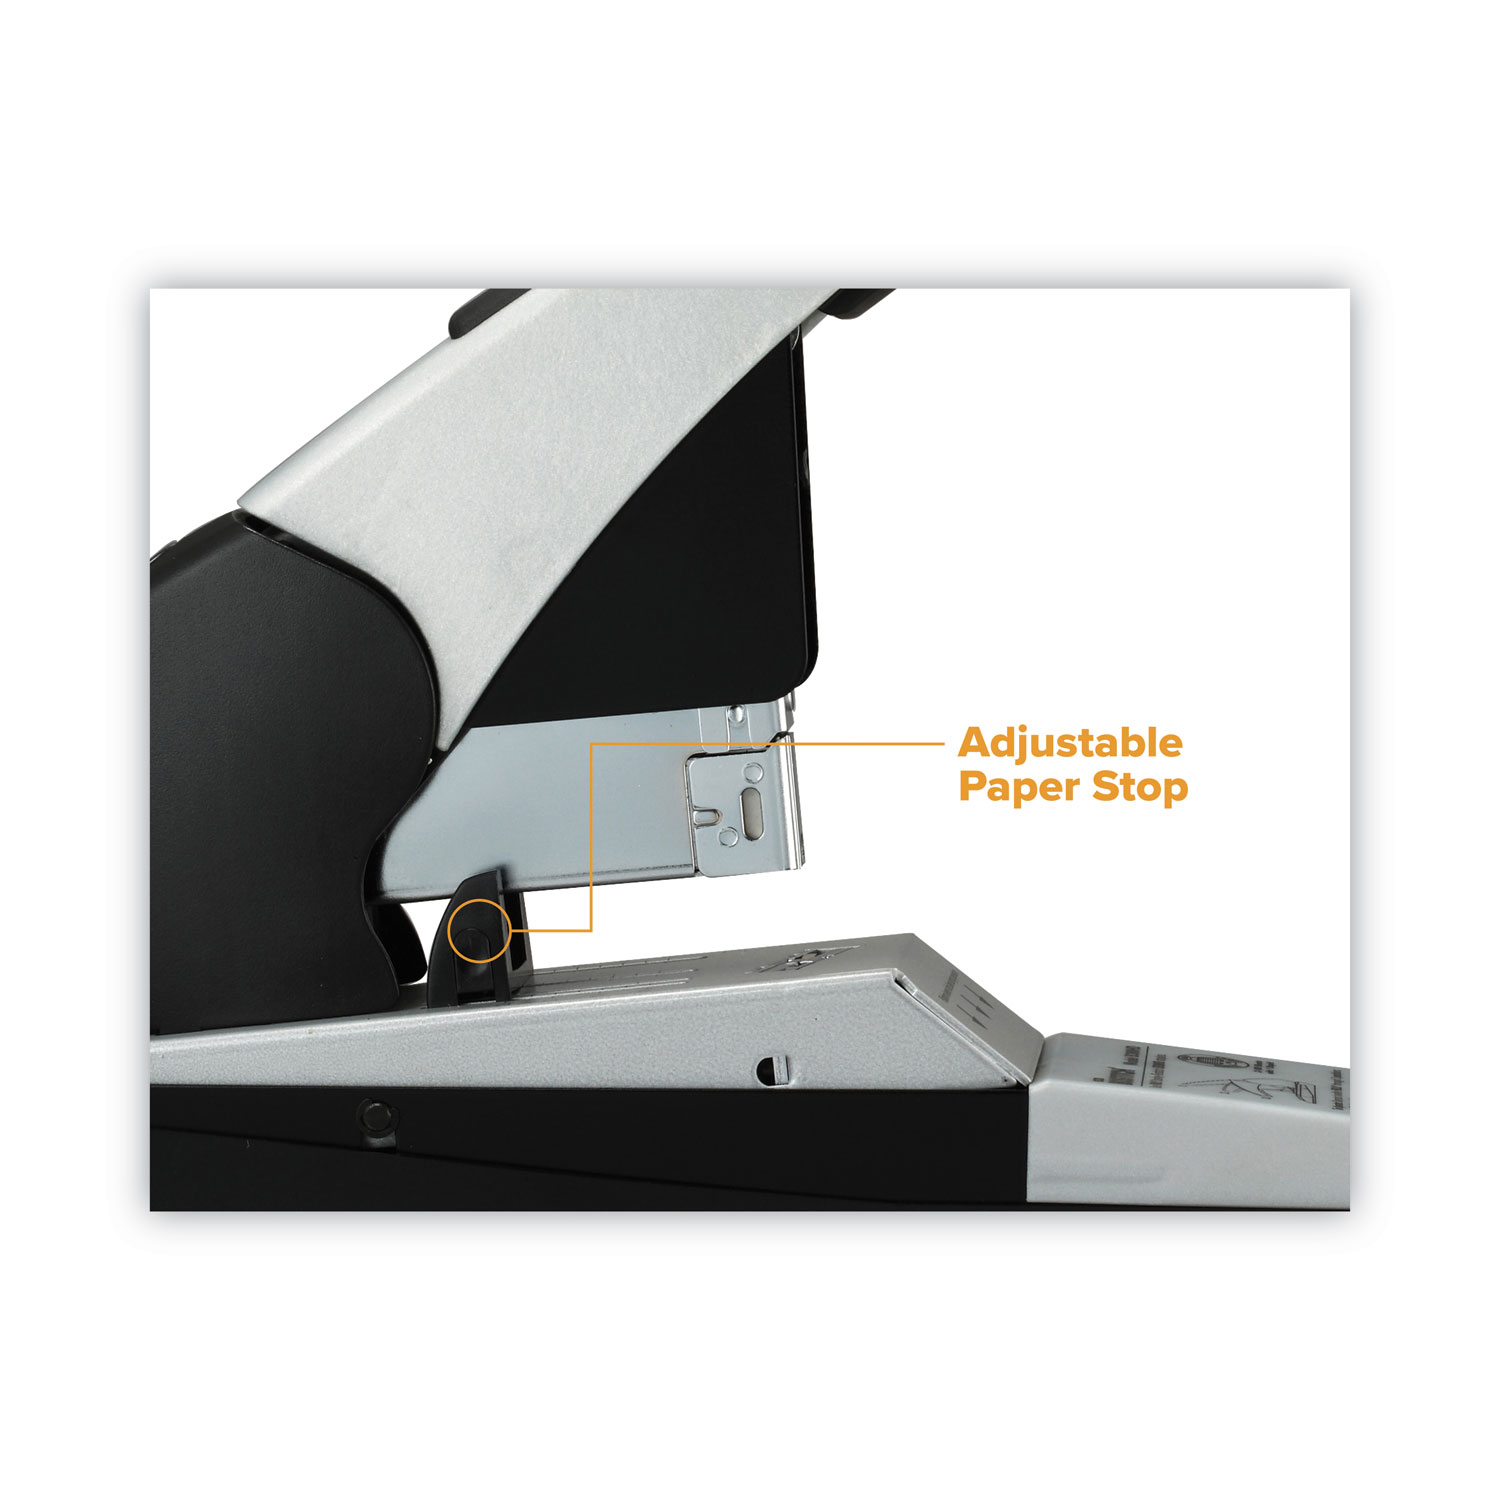 Auto 180 Xtreme Duty Automatic Stapler, 180-Sheet Capacity, Silver/Black -  mastersupplyonline